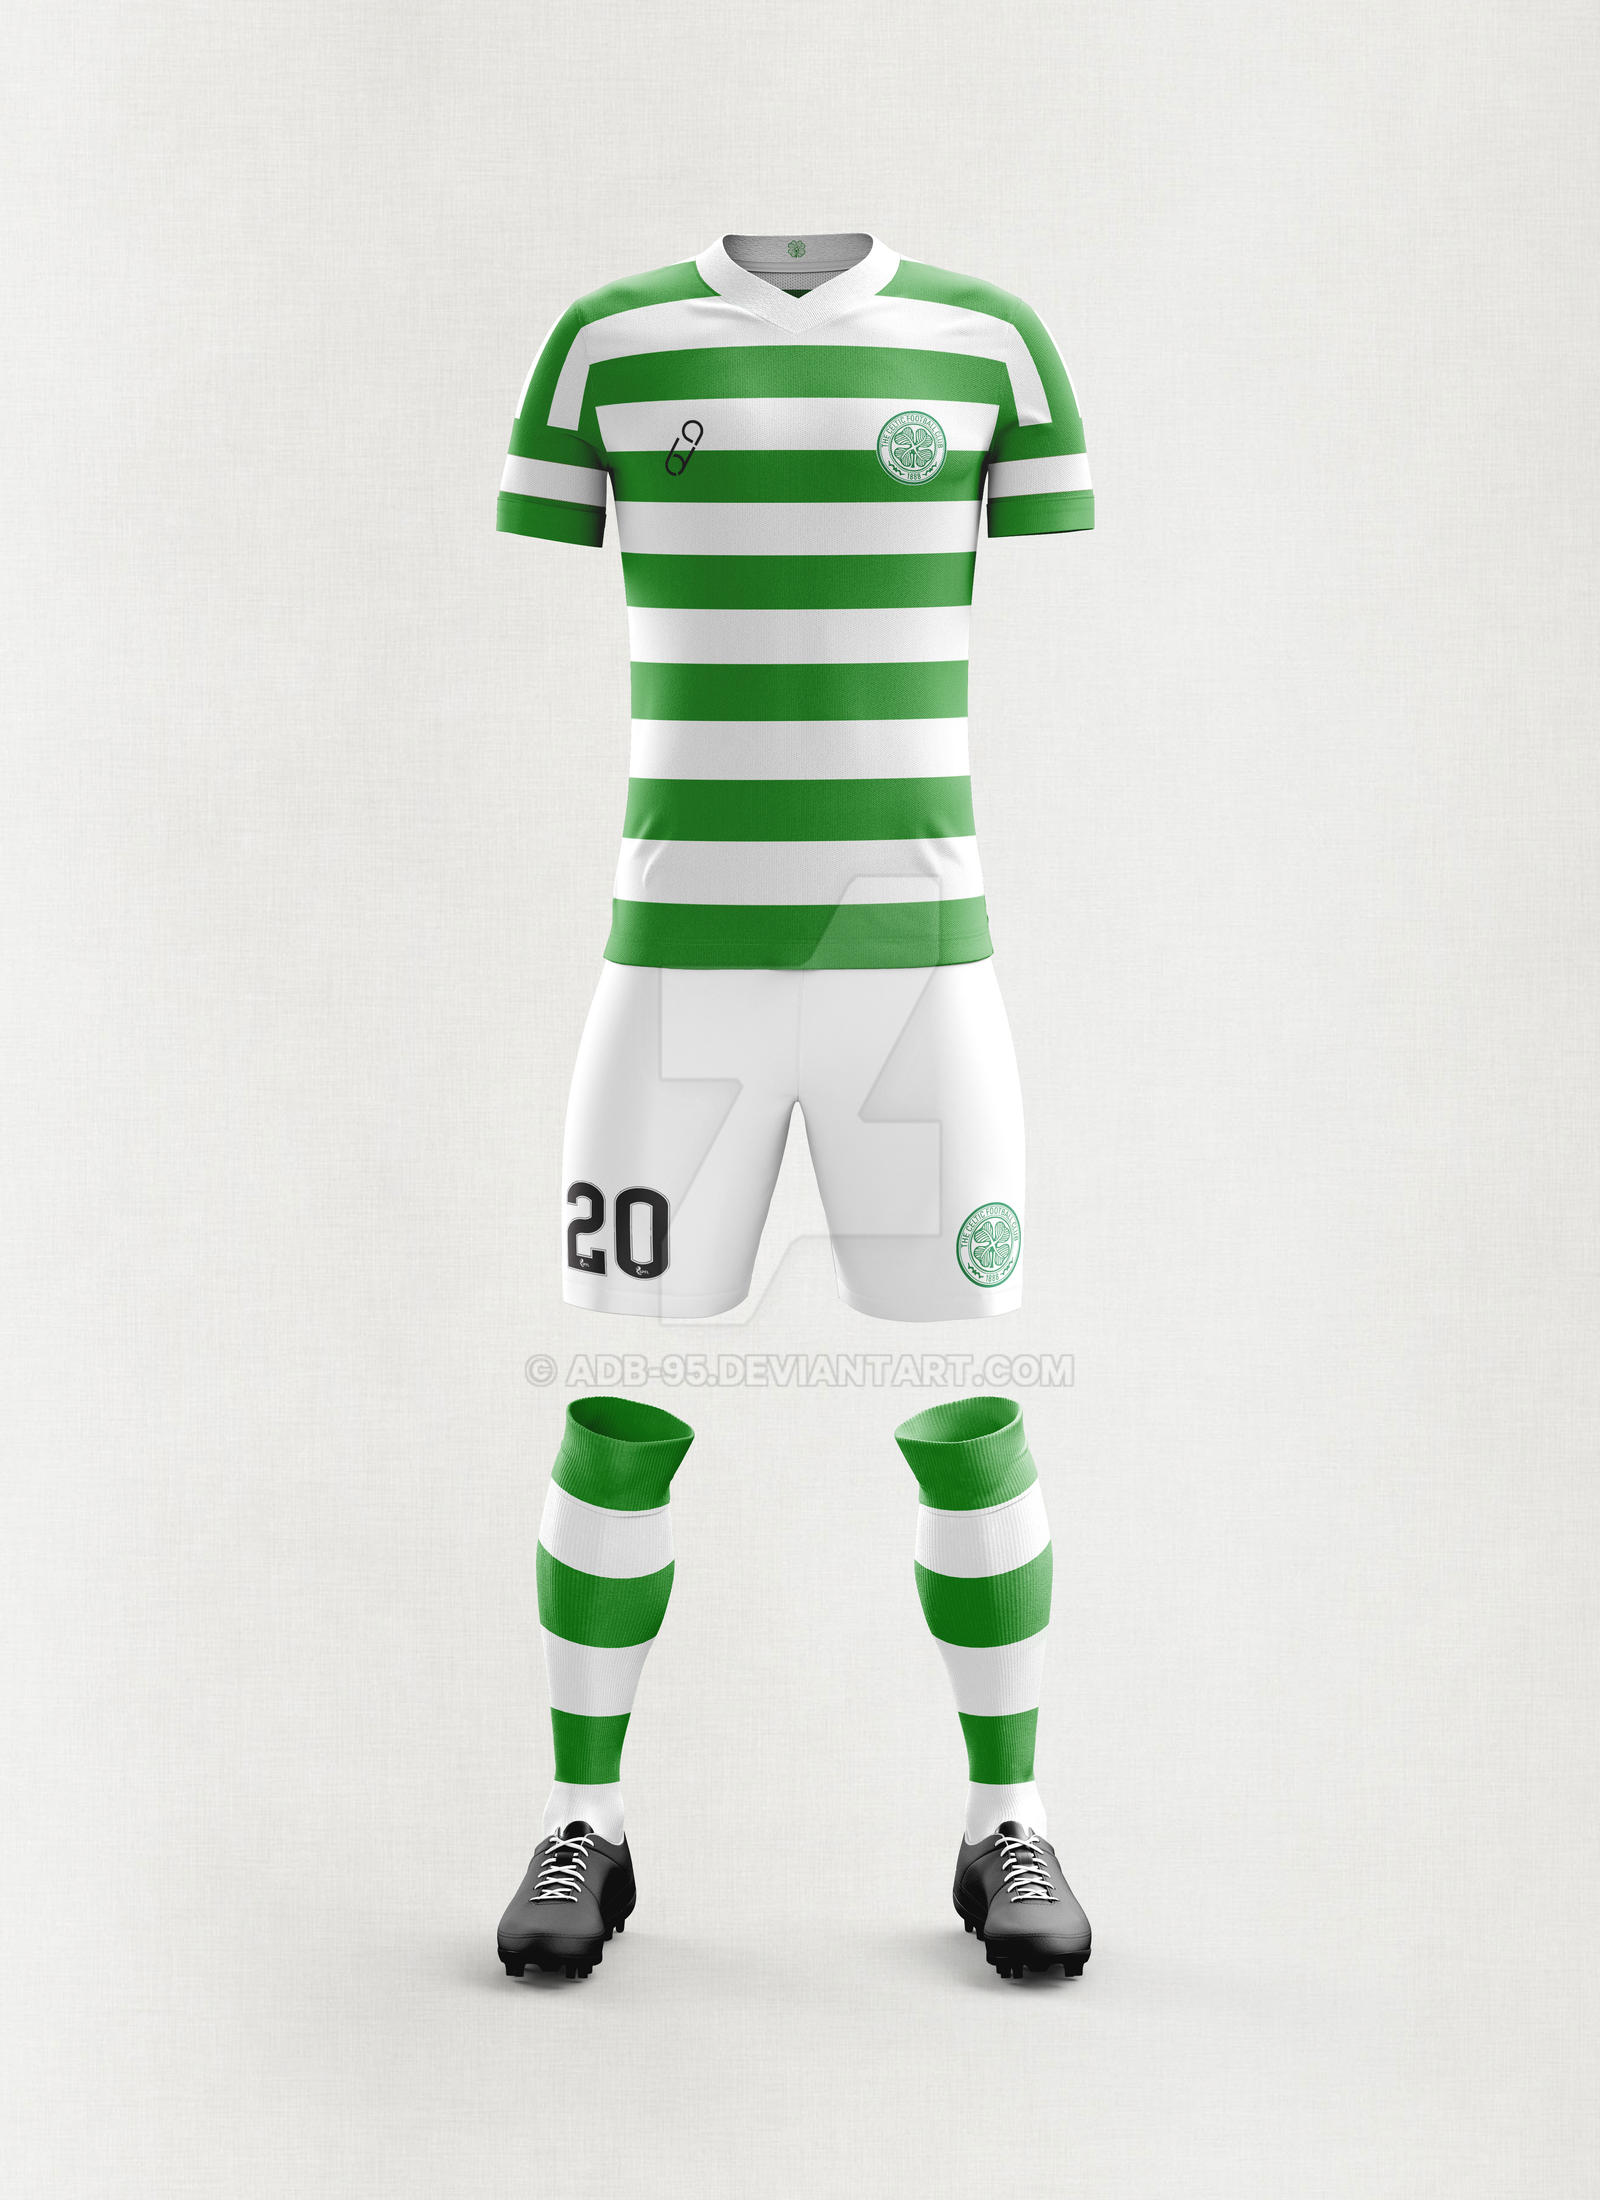 TWO MAS on X: Concept kit @CelticFC #celtic #celticfc @adidas  @adidasfootball #adidas #adidasfootball #soccer #soccerdesign #soccerkit  #kit #football #footballdesign #footballkit #design   / X